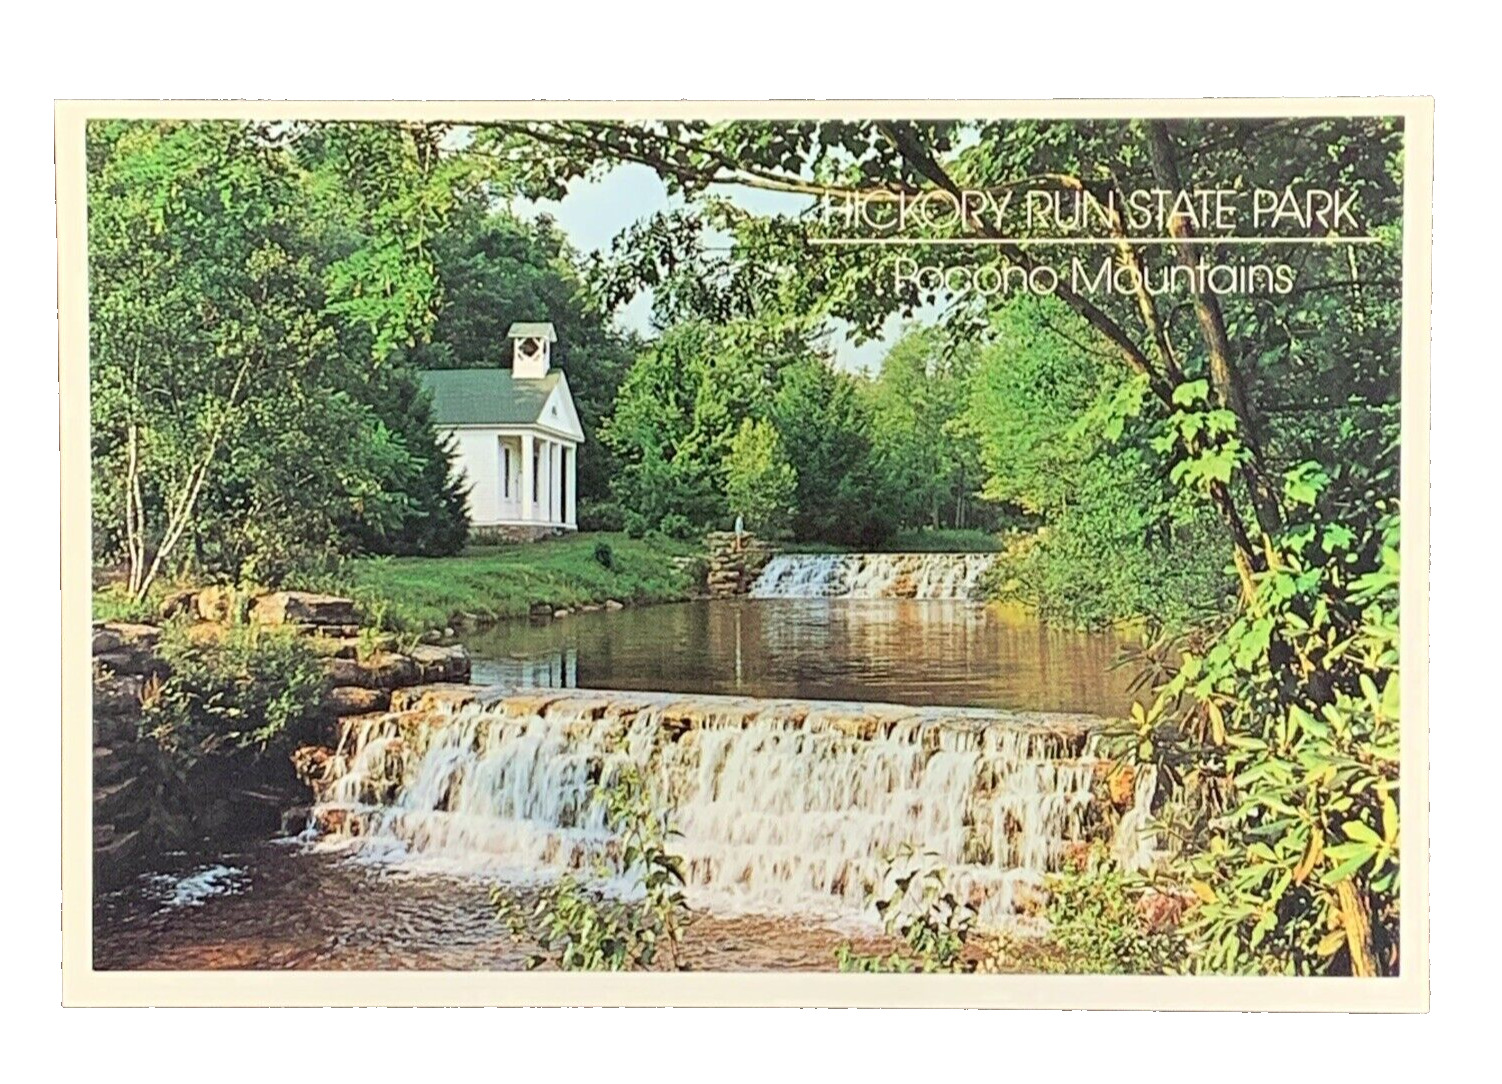 Hickory Run State Park Pocono Mountains Pennsylvania Postcard unposted